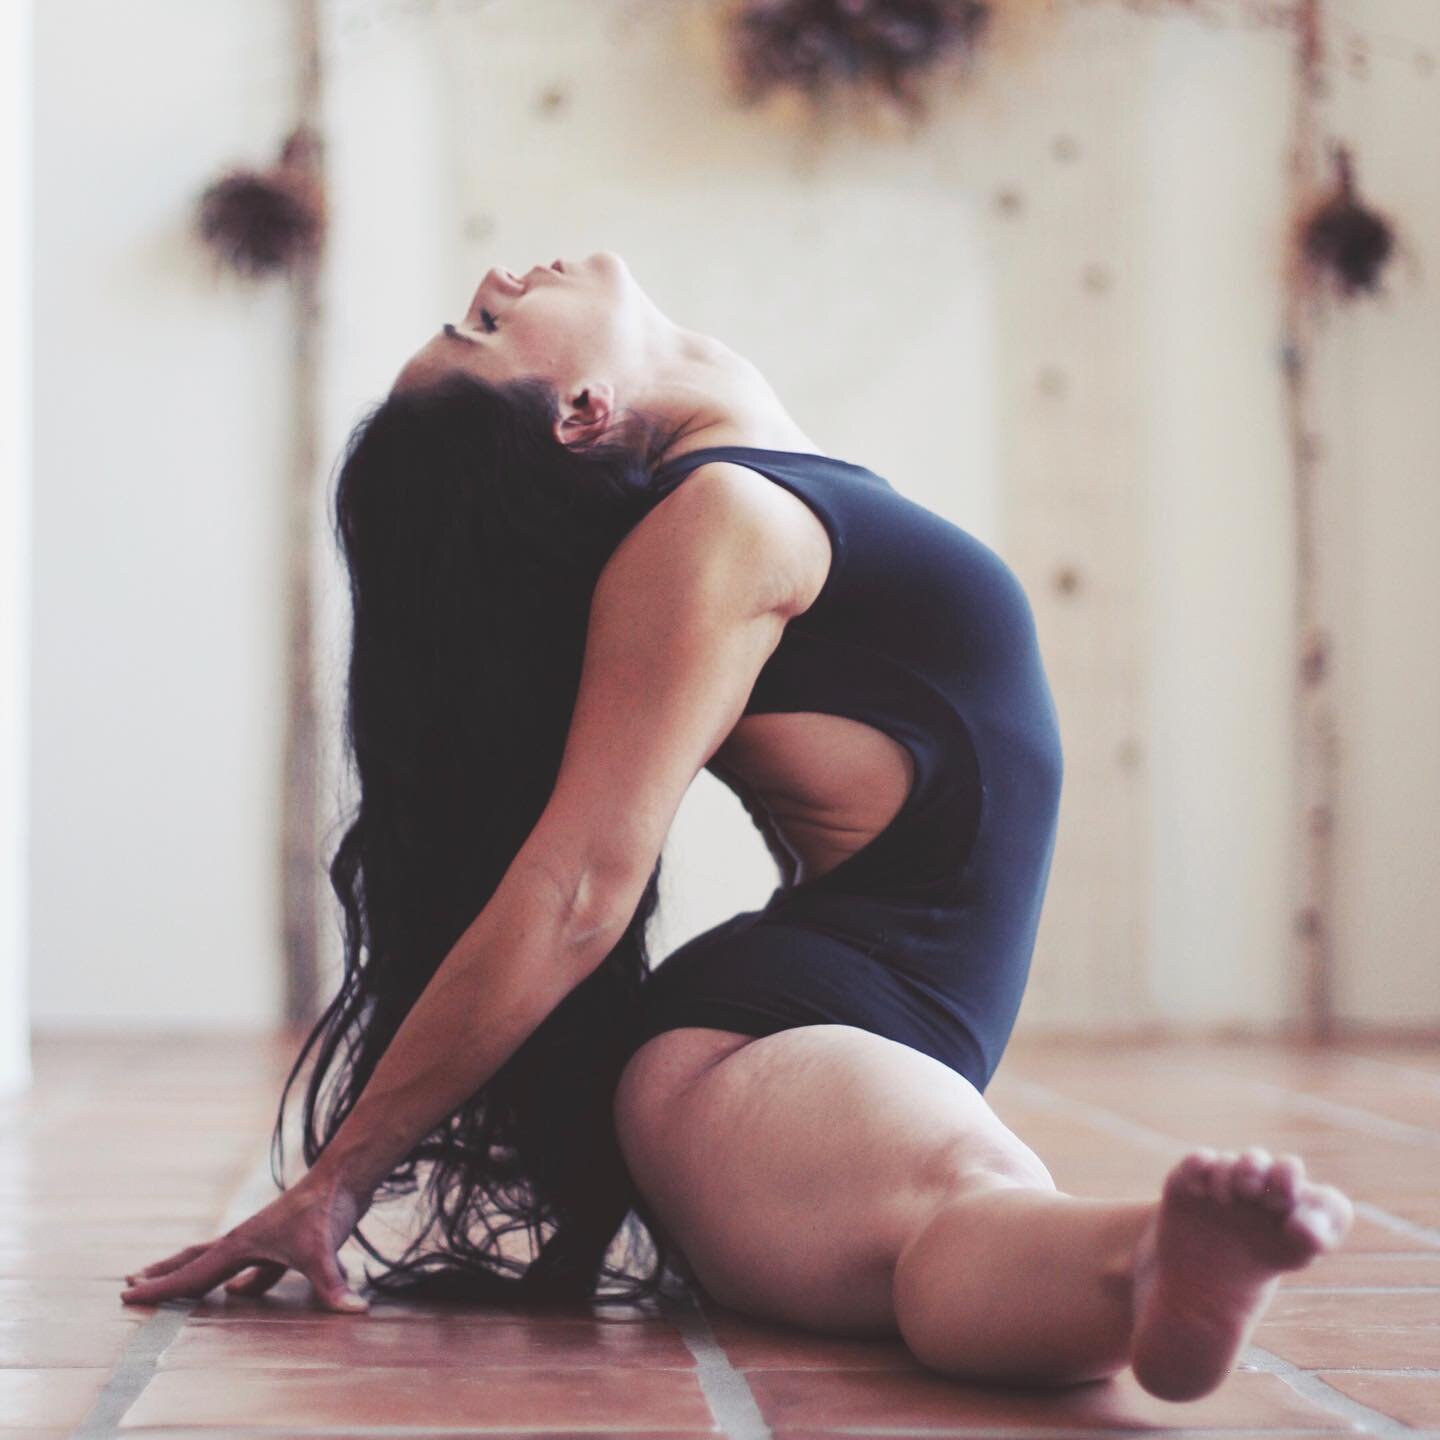 You are magic ✨
#internationalwomensday

@fitasfaith 
PC @lcostaphoto 
 #mikayogawear #mikachica #yoga